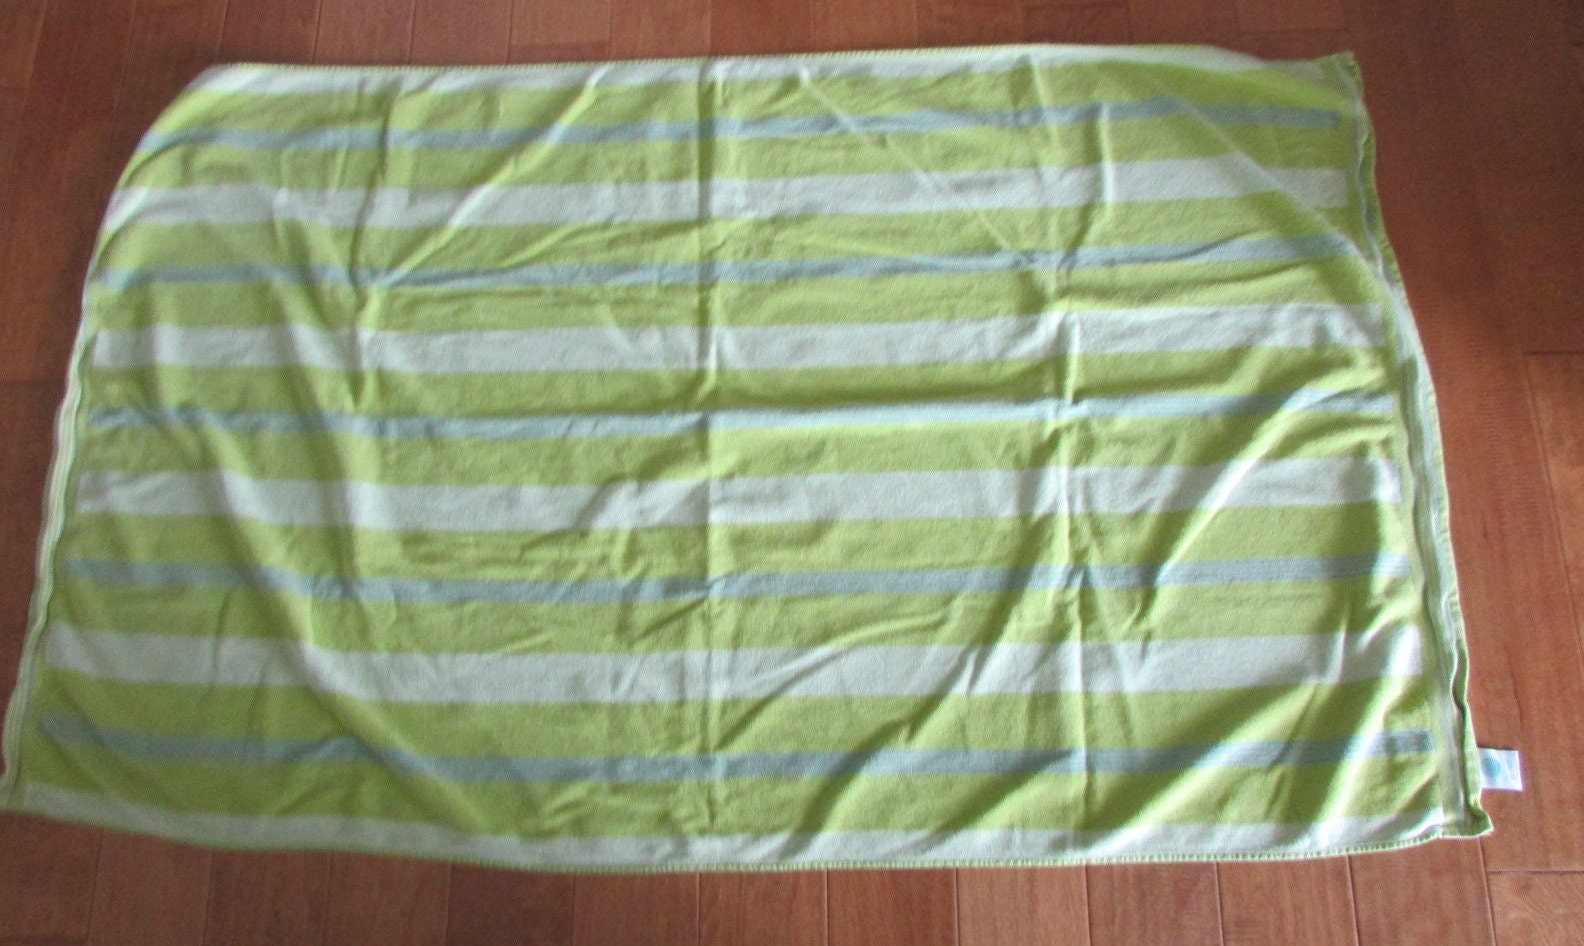 Martha Stewart Collection Quick-Dry Reversible Bath Towel, 27 x